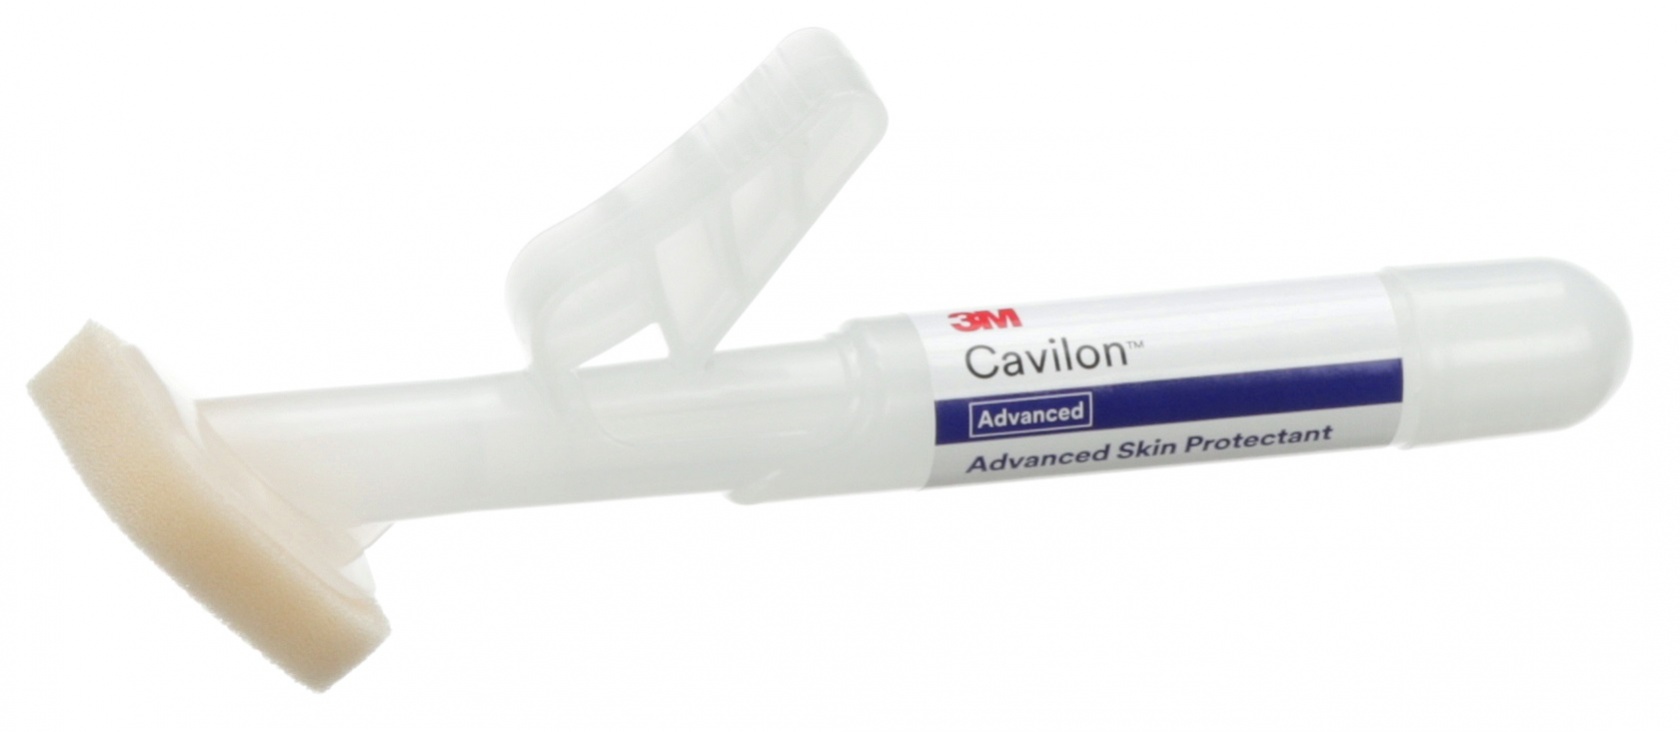 3M Cavilon Advanced Skin Protectant Wand 0.7ml